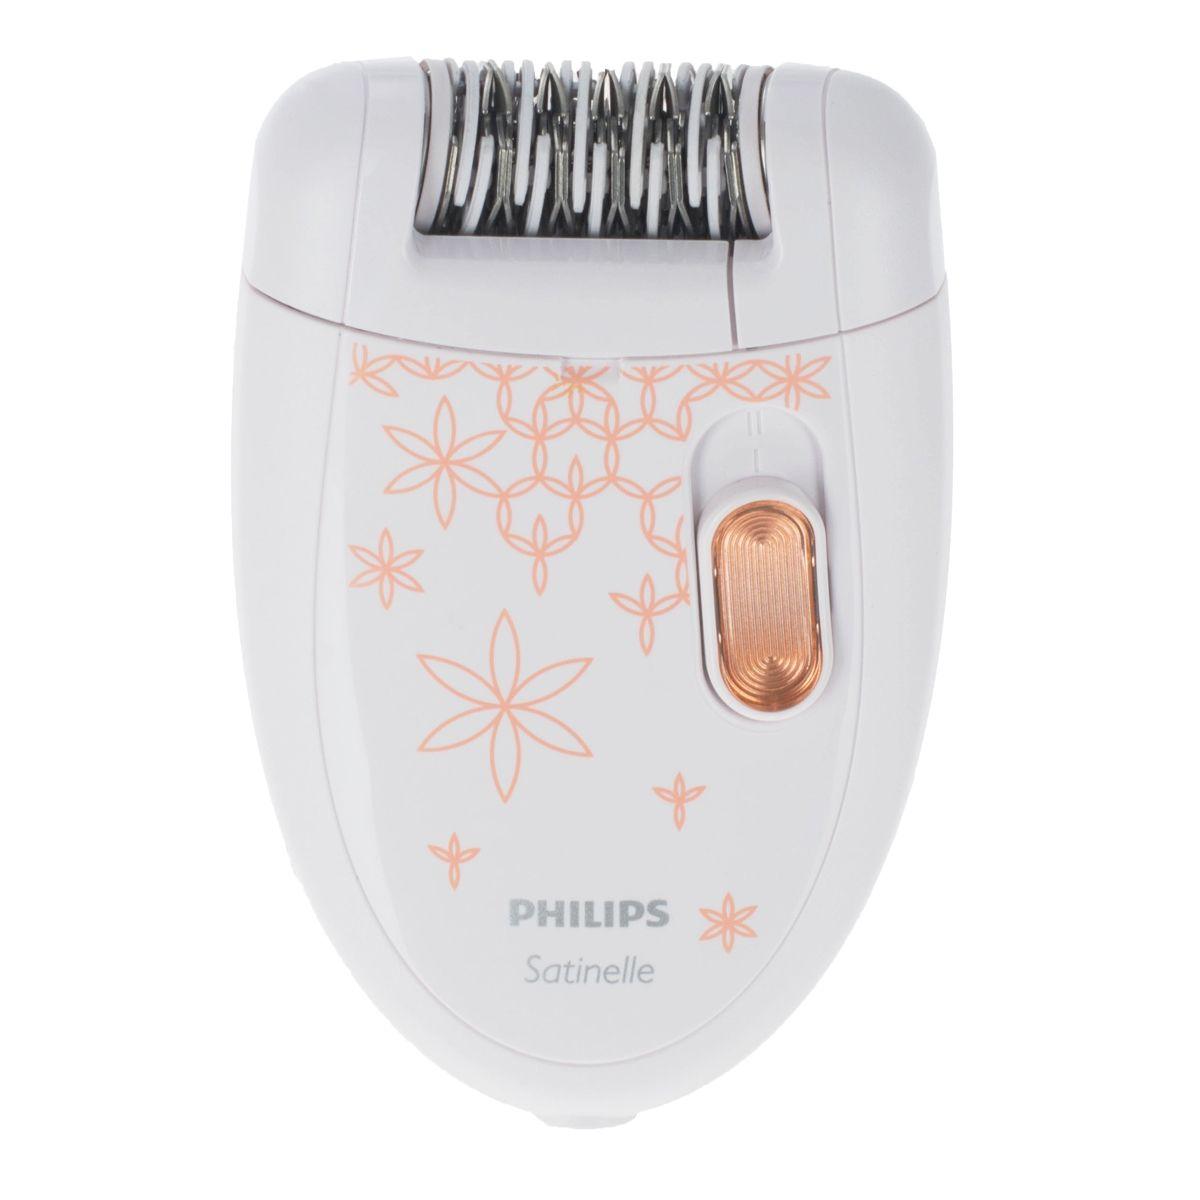 Купить эпилятор philips. Эпилятор Филипс 6420. Philips Satinelle hp6420/00. Эпилятор Филипс Satinelle. Эпилятор Филипс оранжевый.